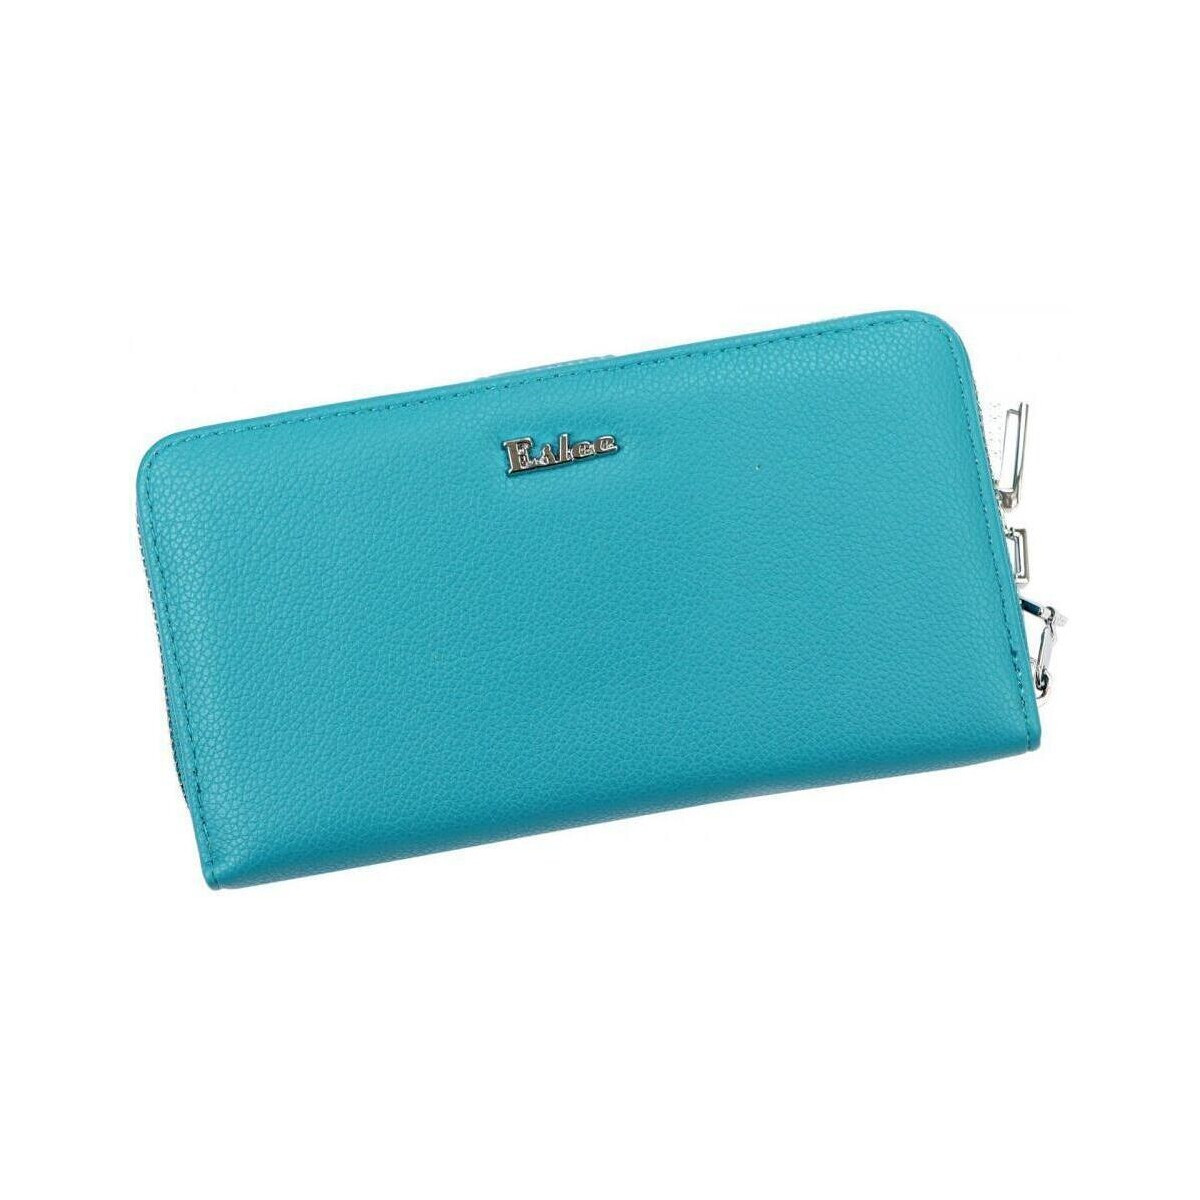 Eslee  praktická světle modrá matná dámská peněženka  Modrá